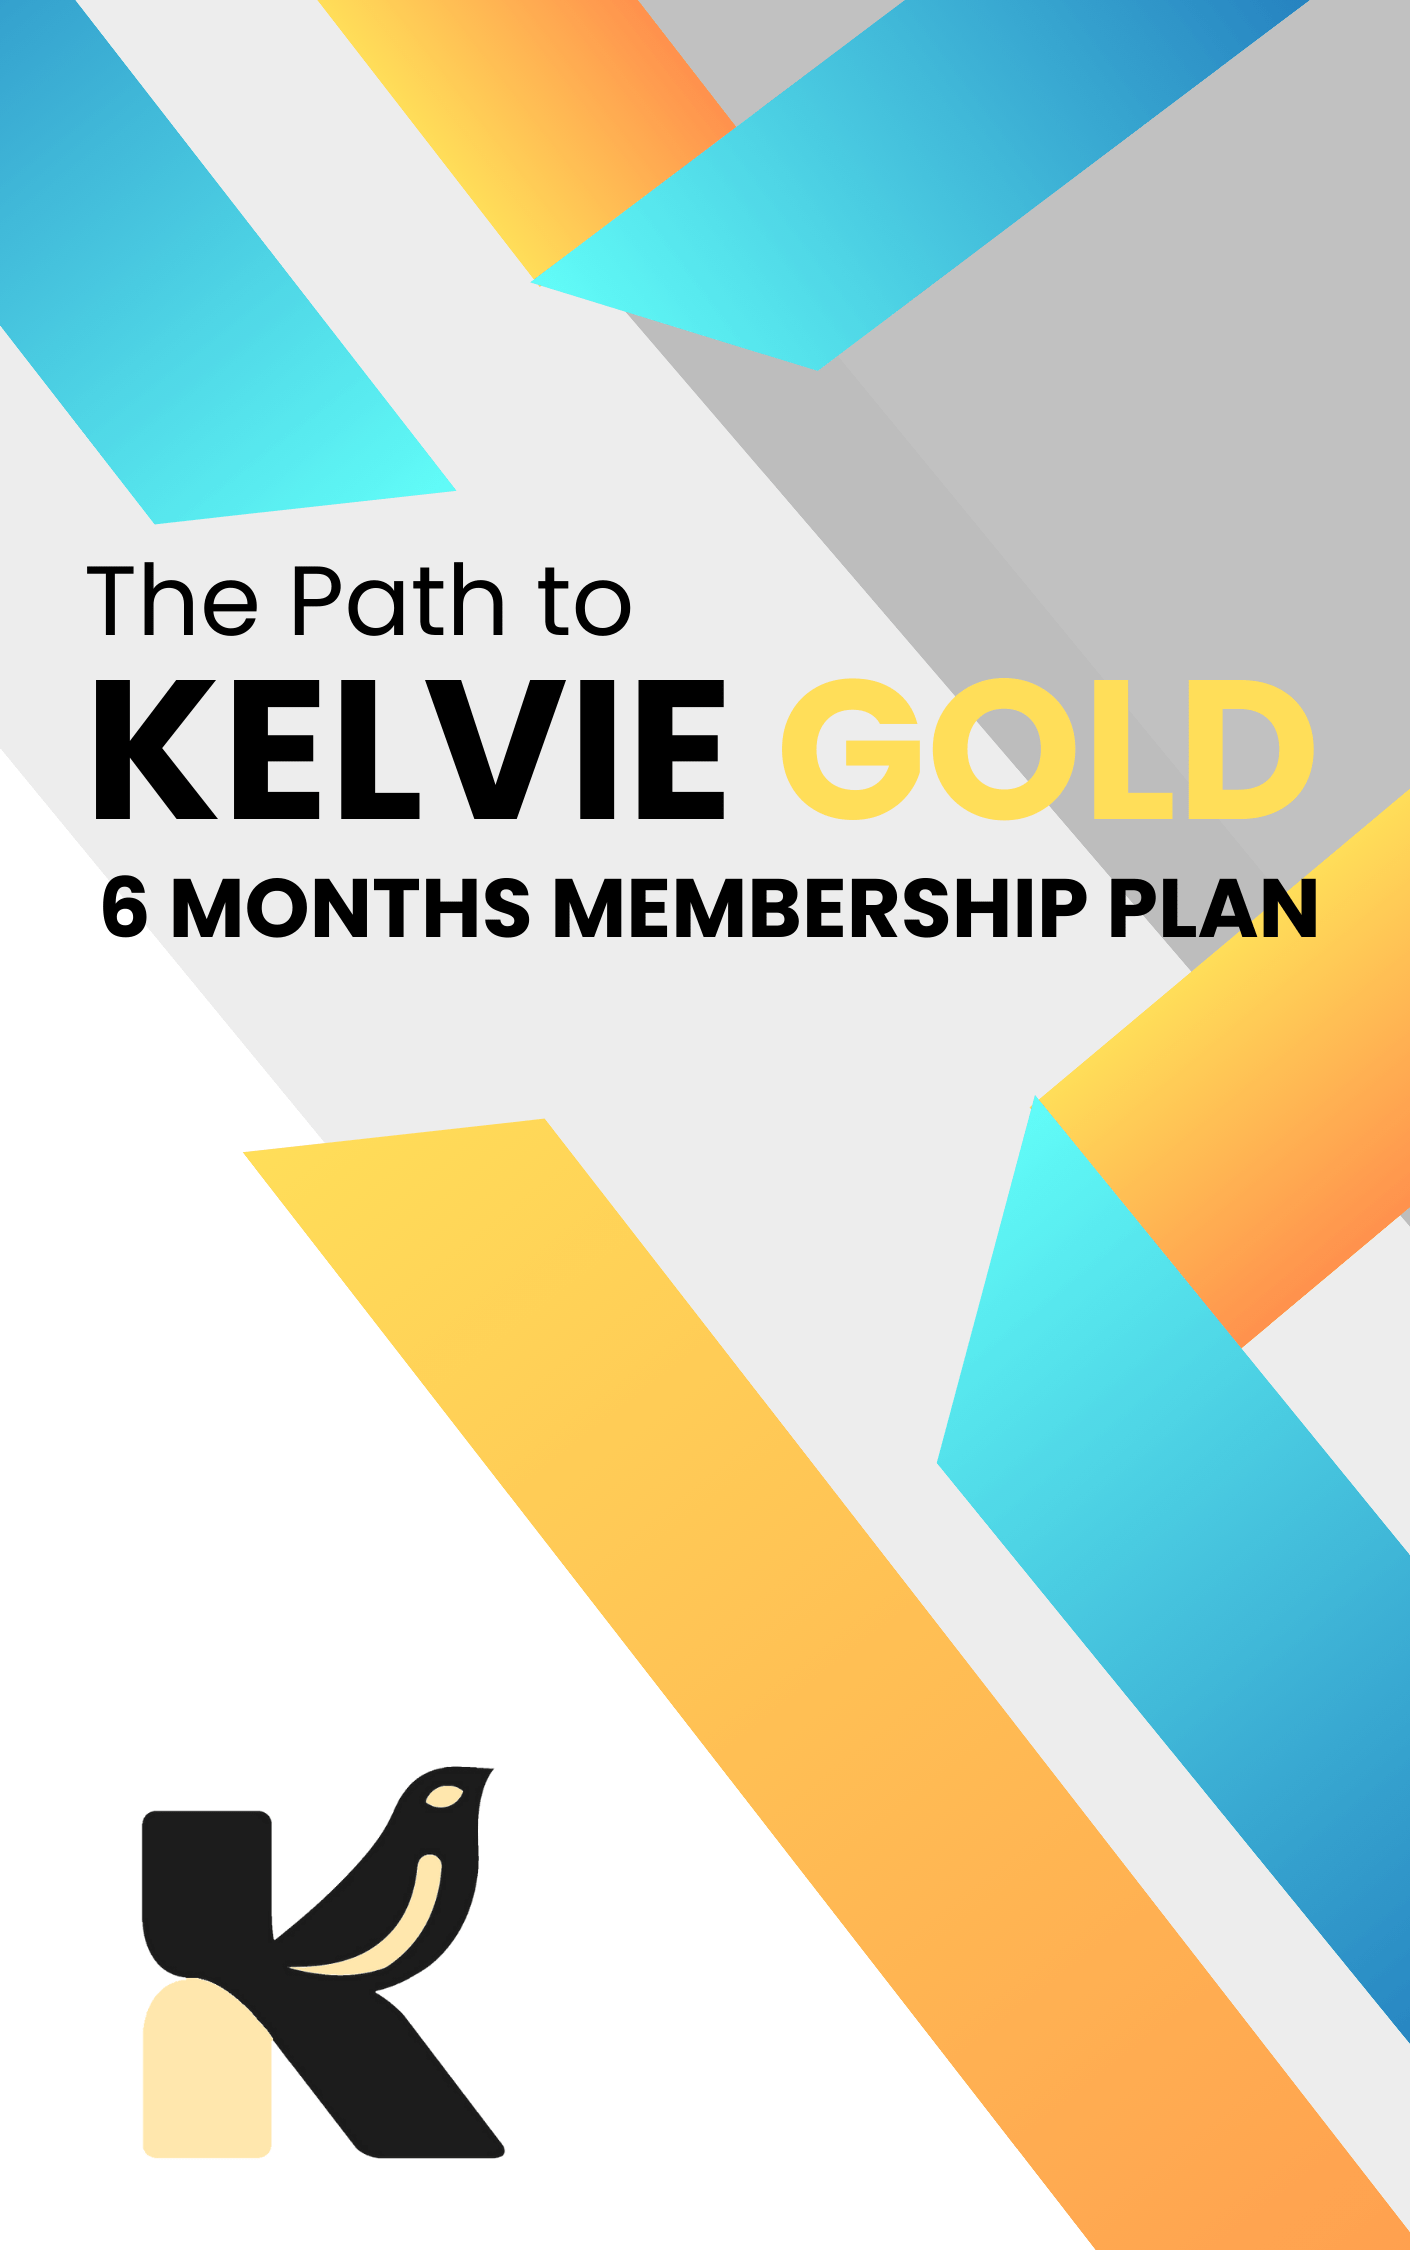 KELVIE GOLD - 6 Months Membership